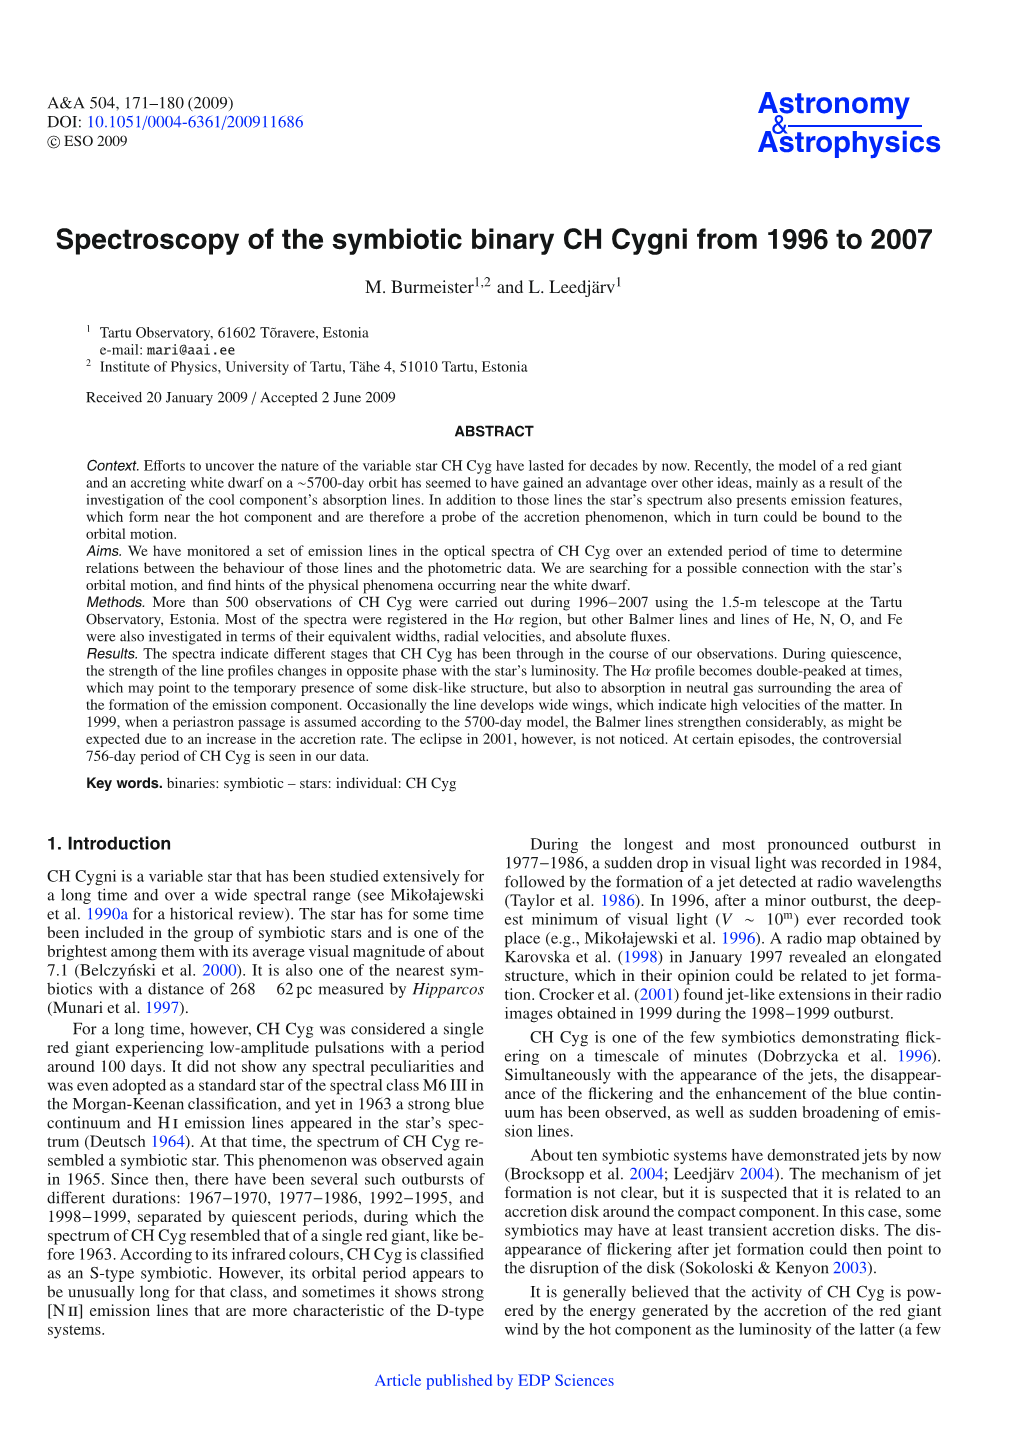 Spectroscopy of the Symbiotic Binary CH Cygni from 1996 to 2007